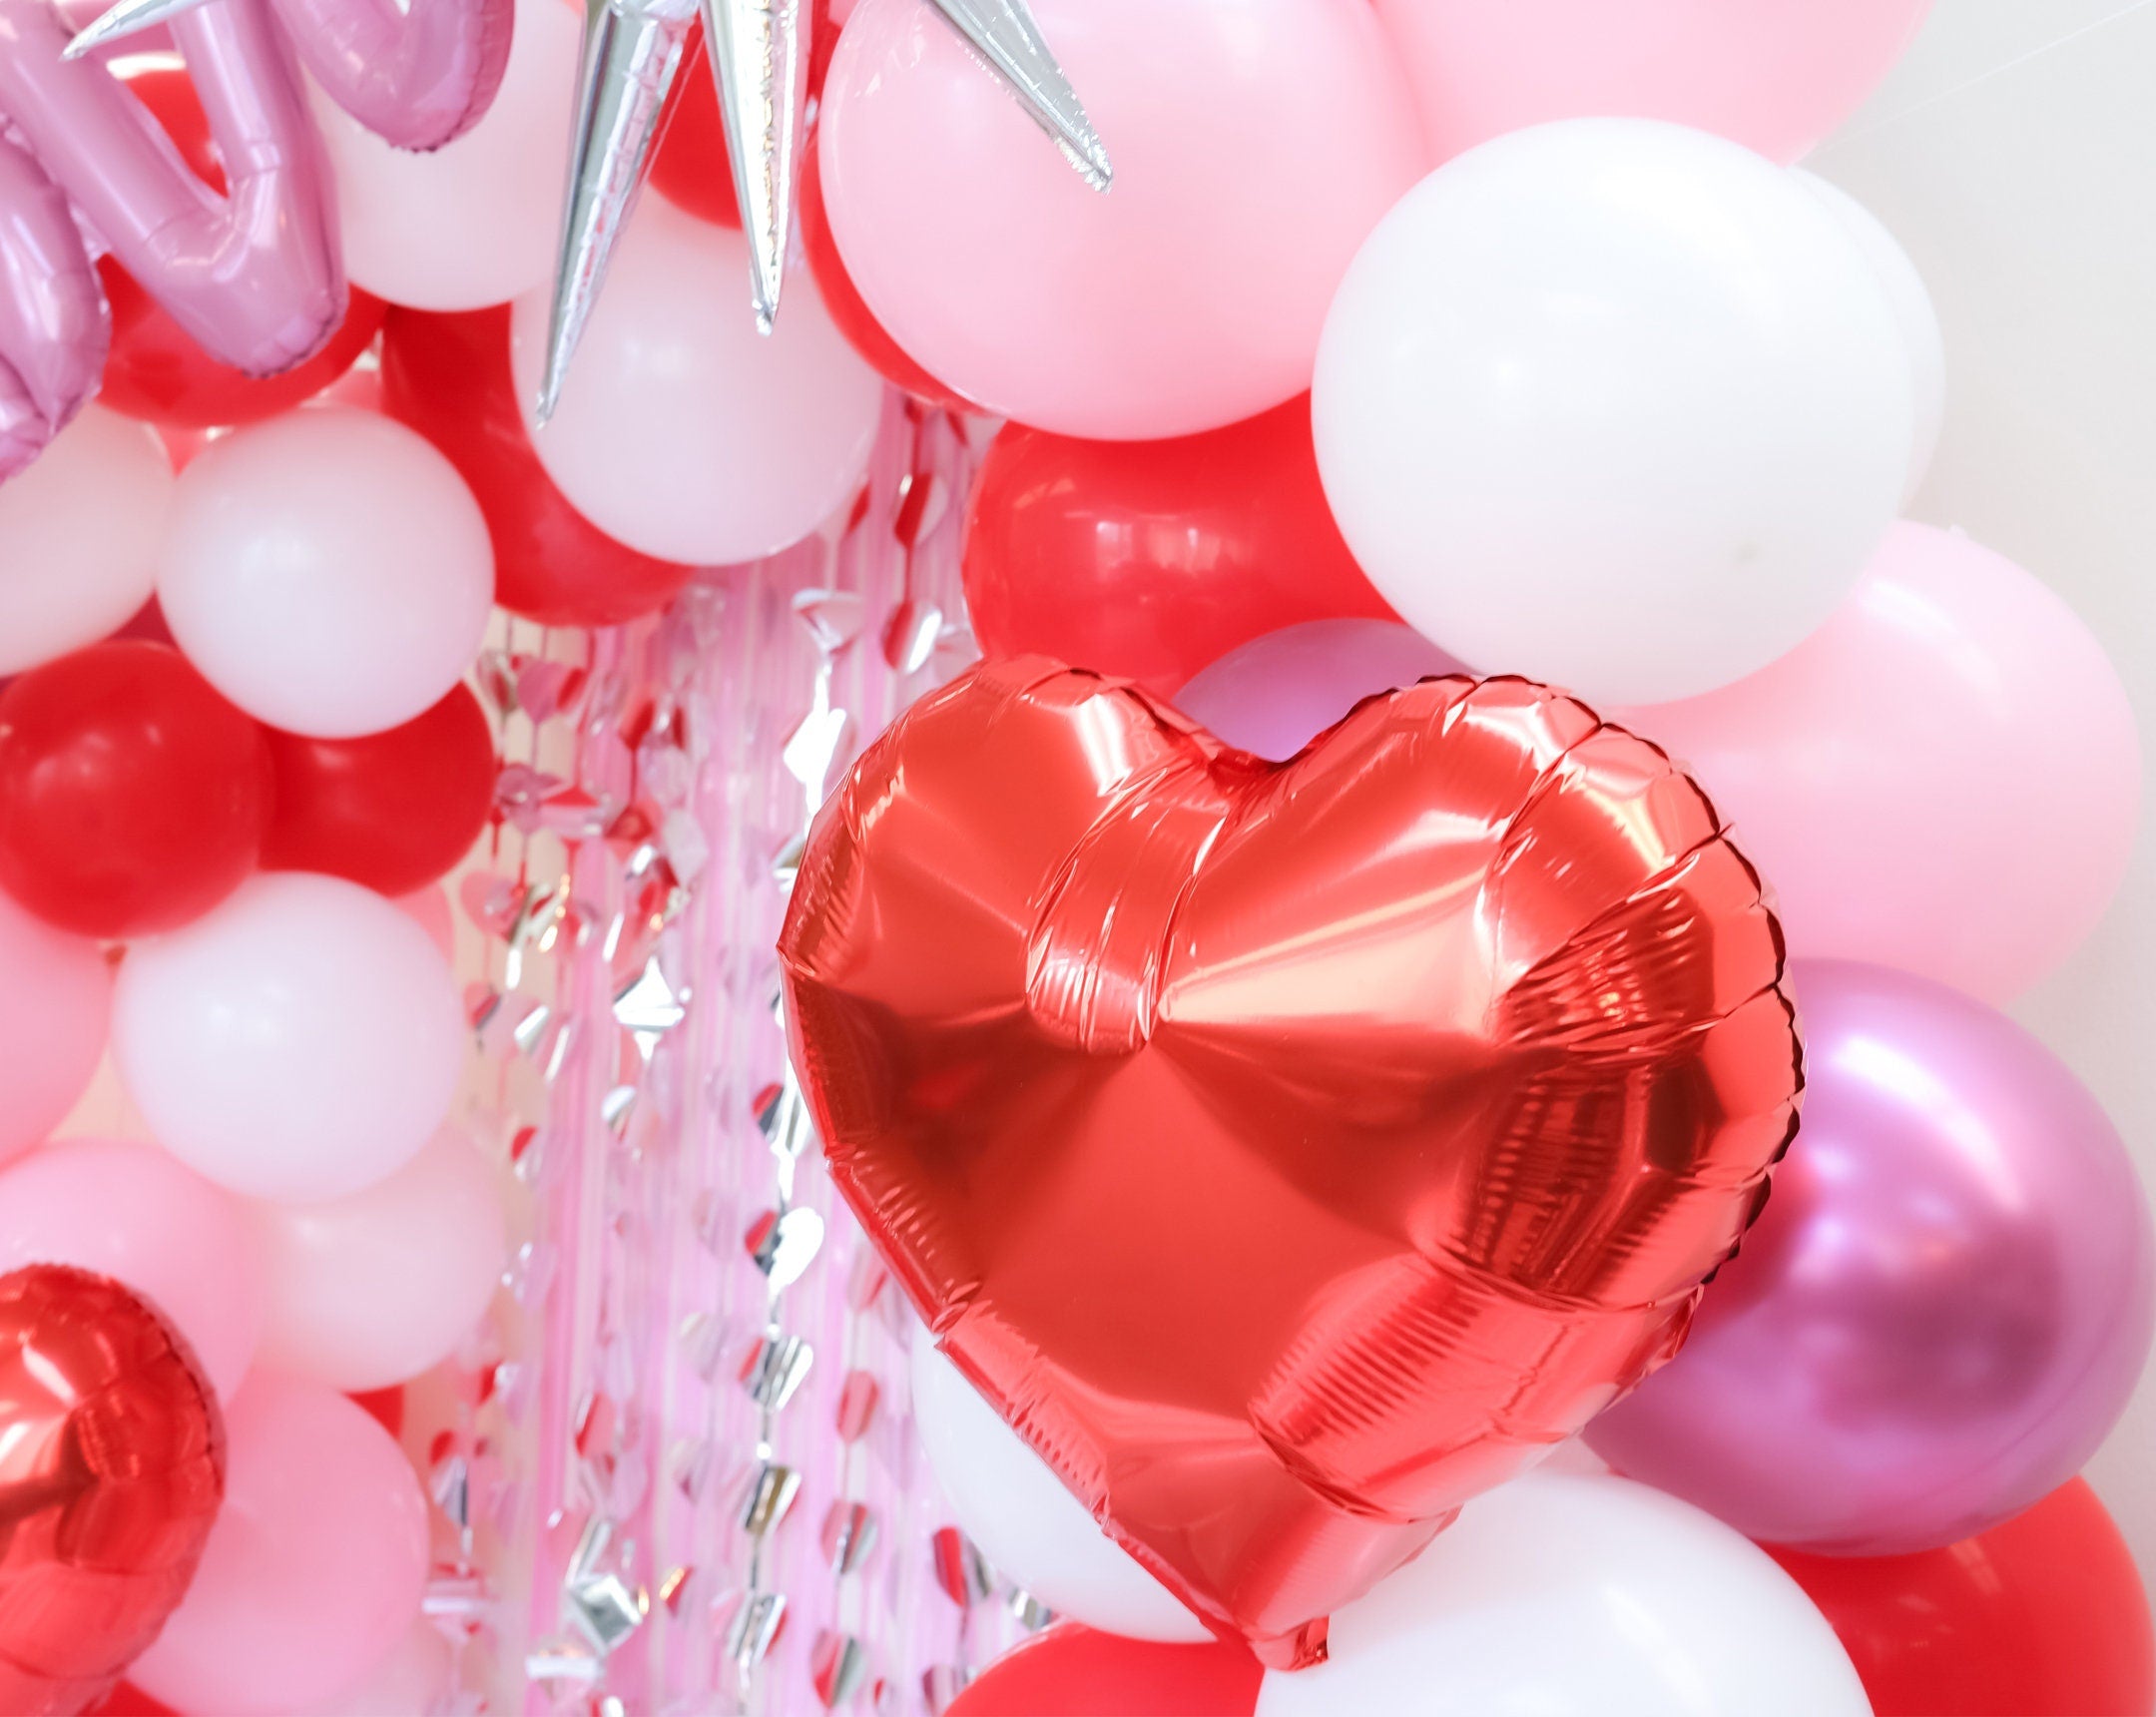 Galentines Day Balloon Garland Kit Valentines Gender Reveal Decors